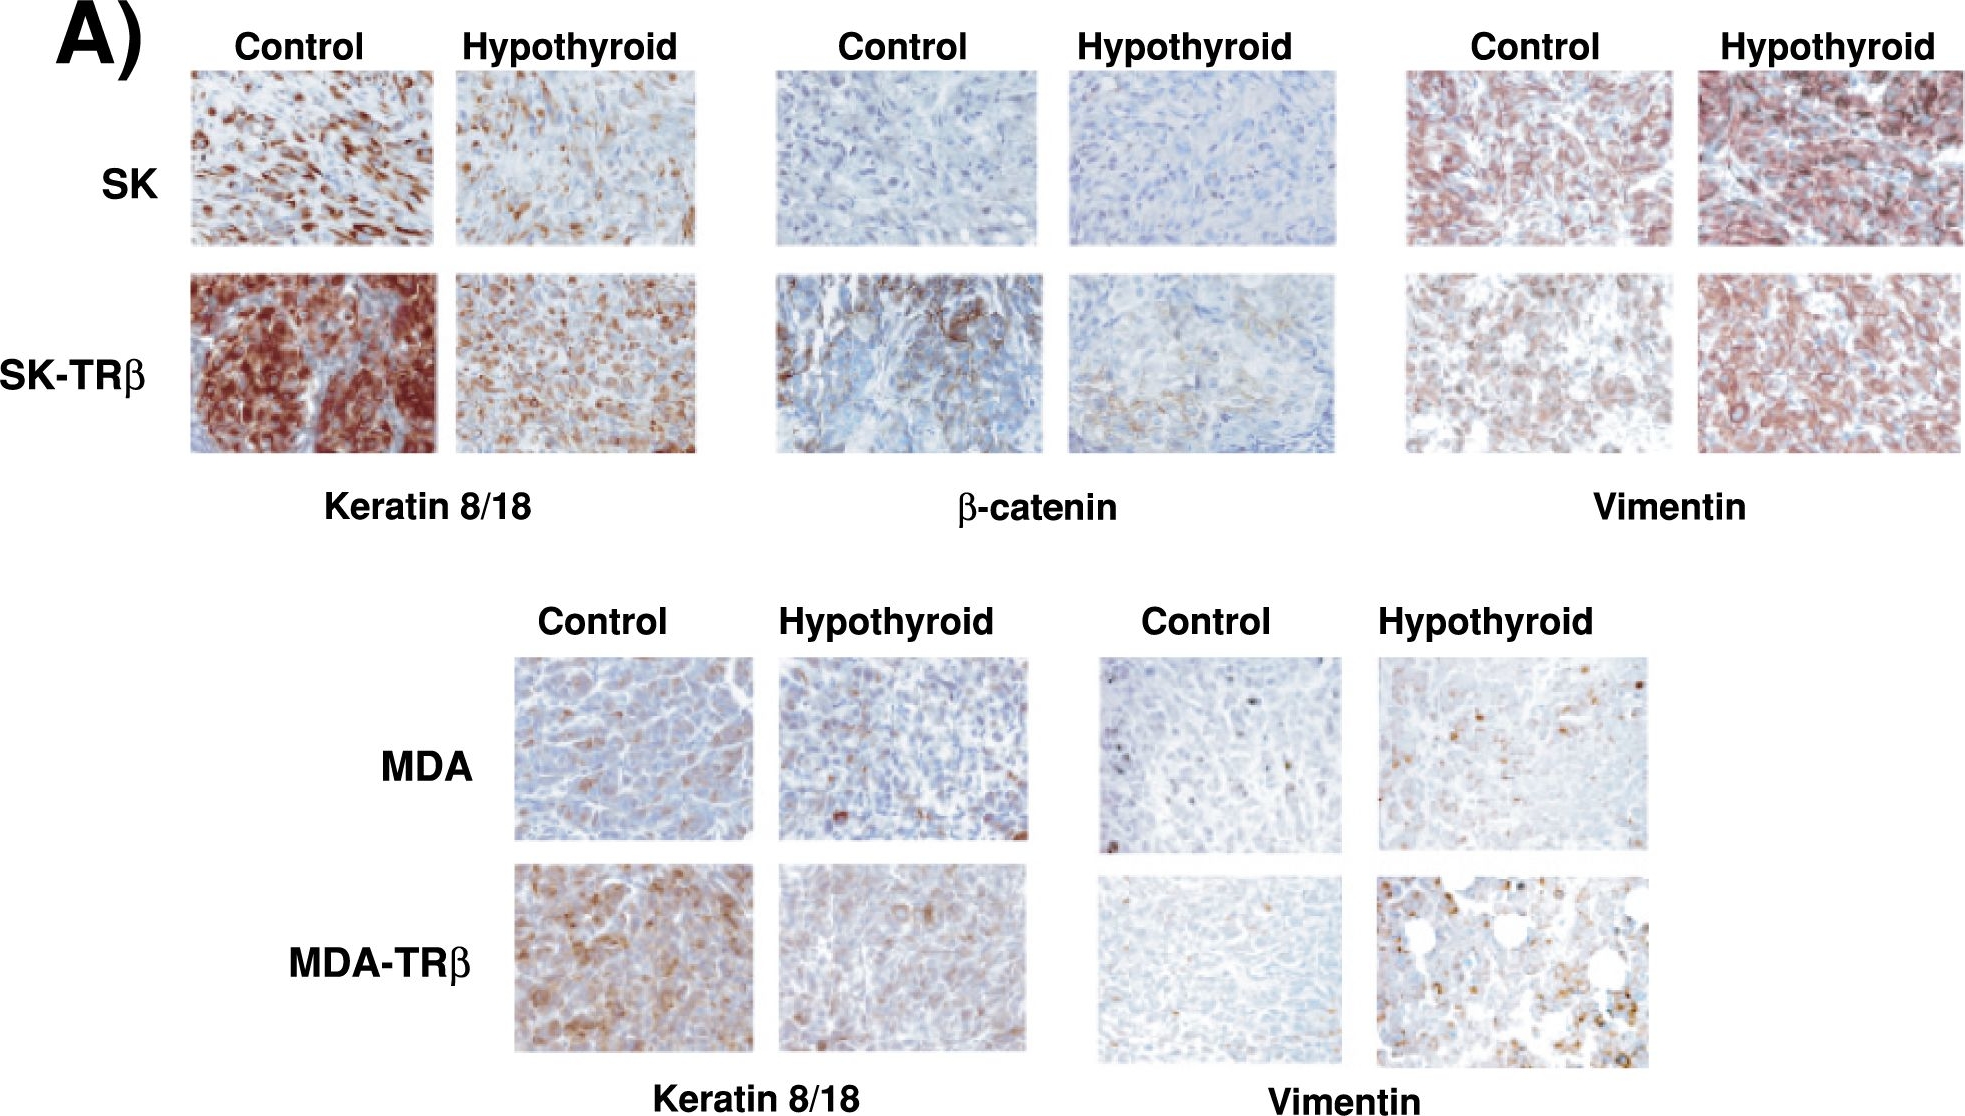 Hypothyroidism enhances tumor invasiveness and metastasis development.